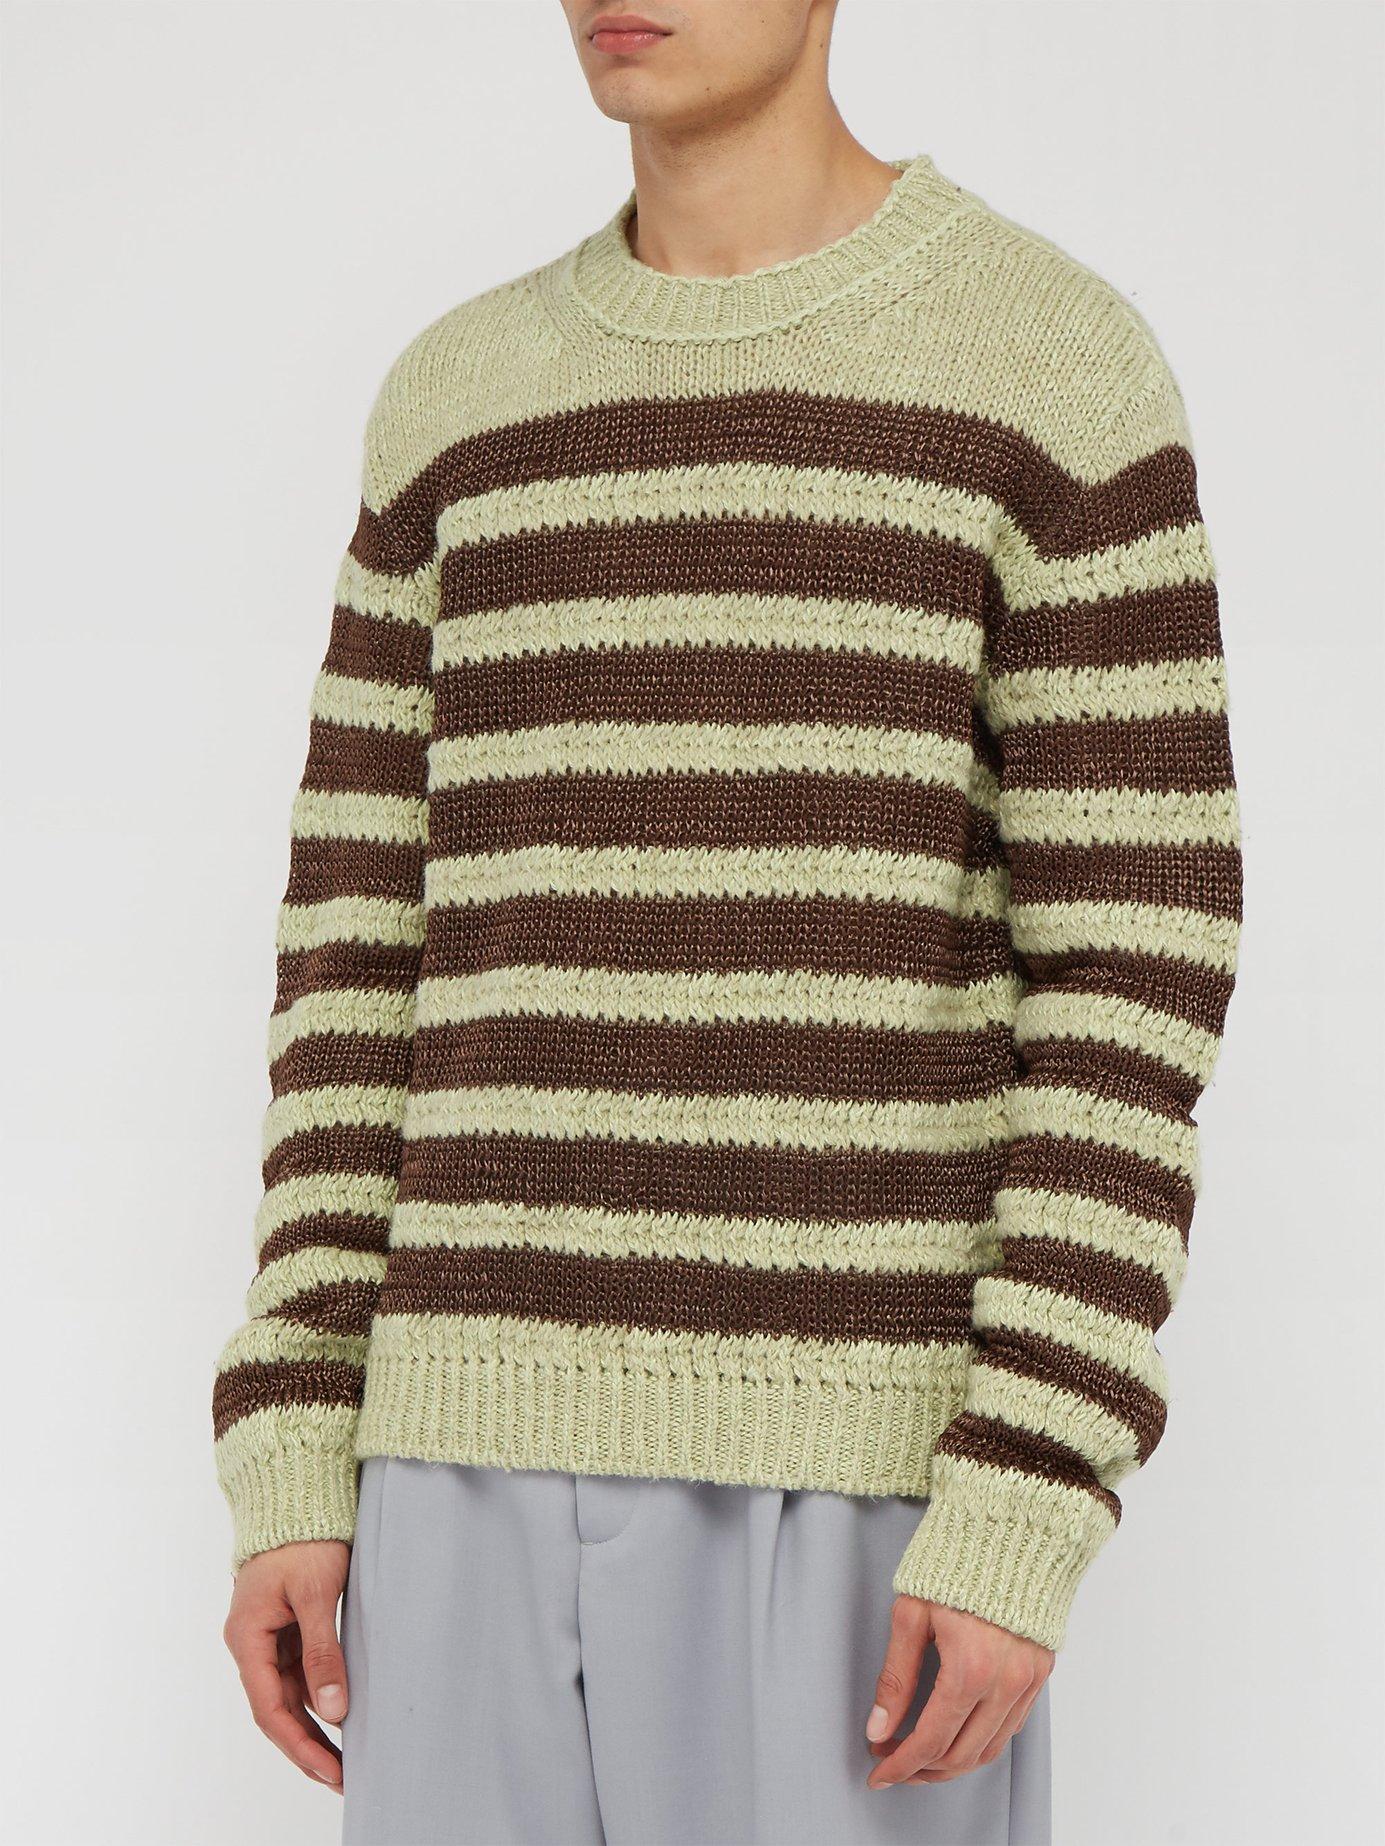 Acne Studios Linen Striped Sweater in Brown (Green) for Men - Lyst